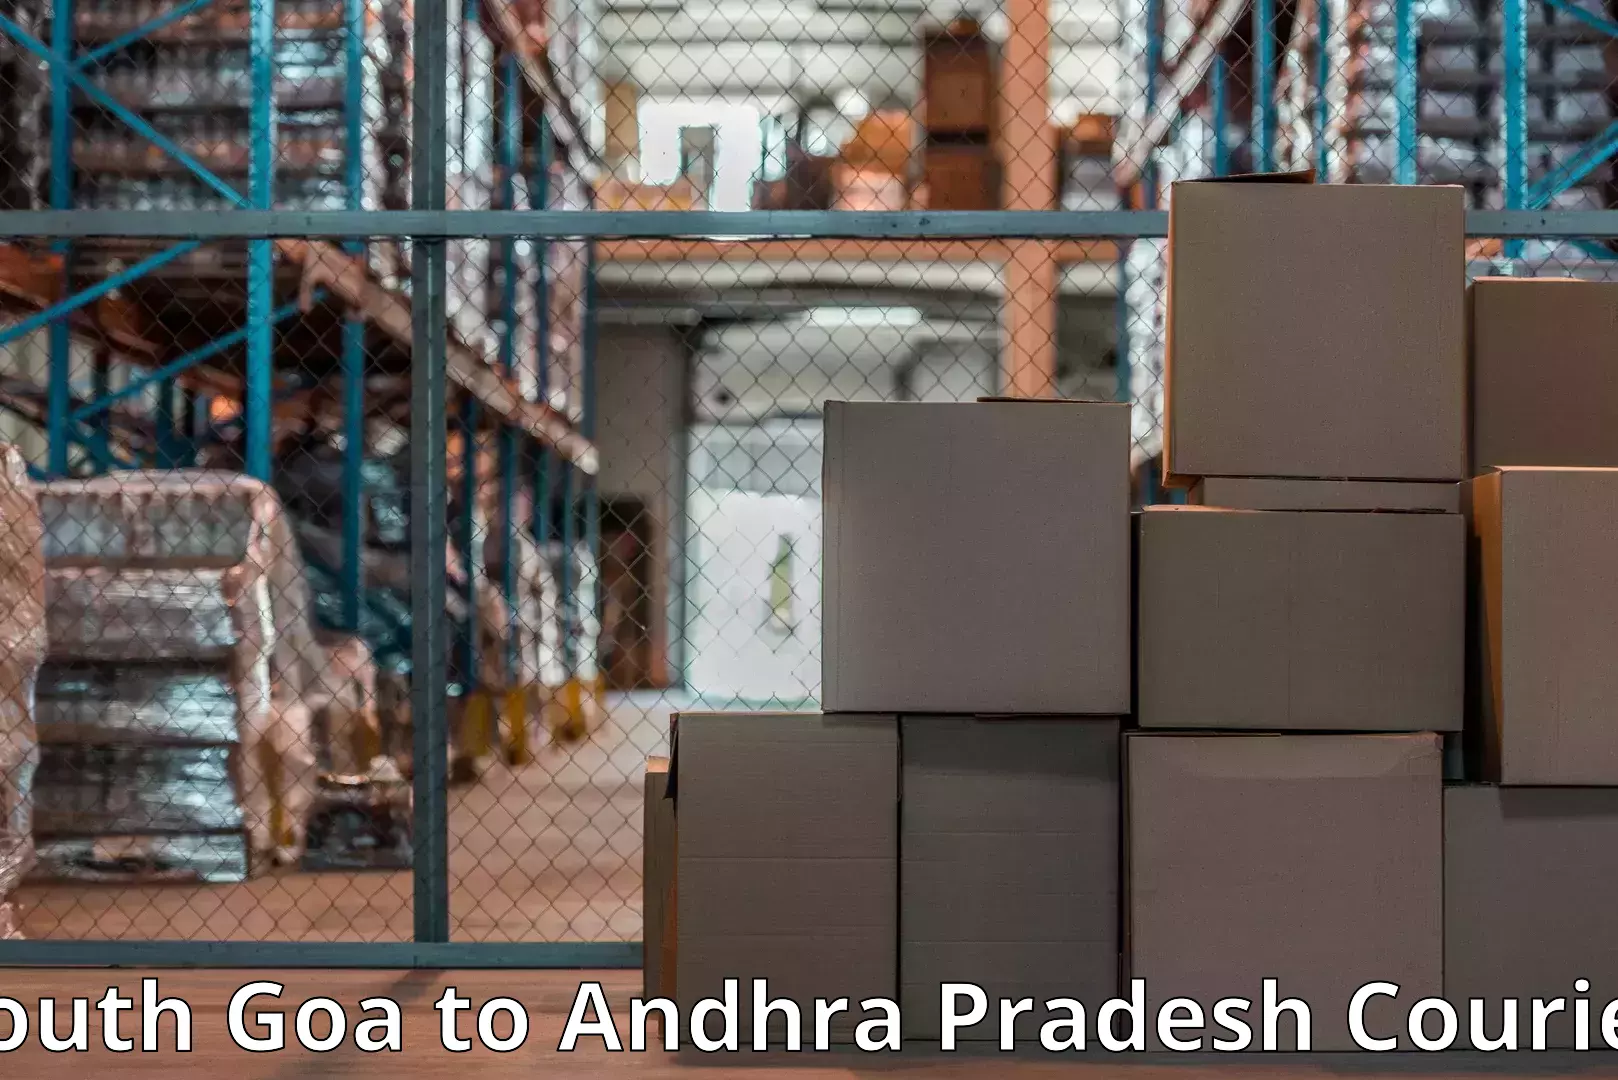 Quality moving company South Goa to Alur